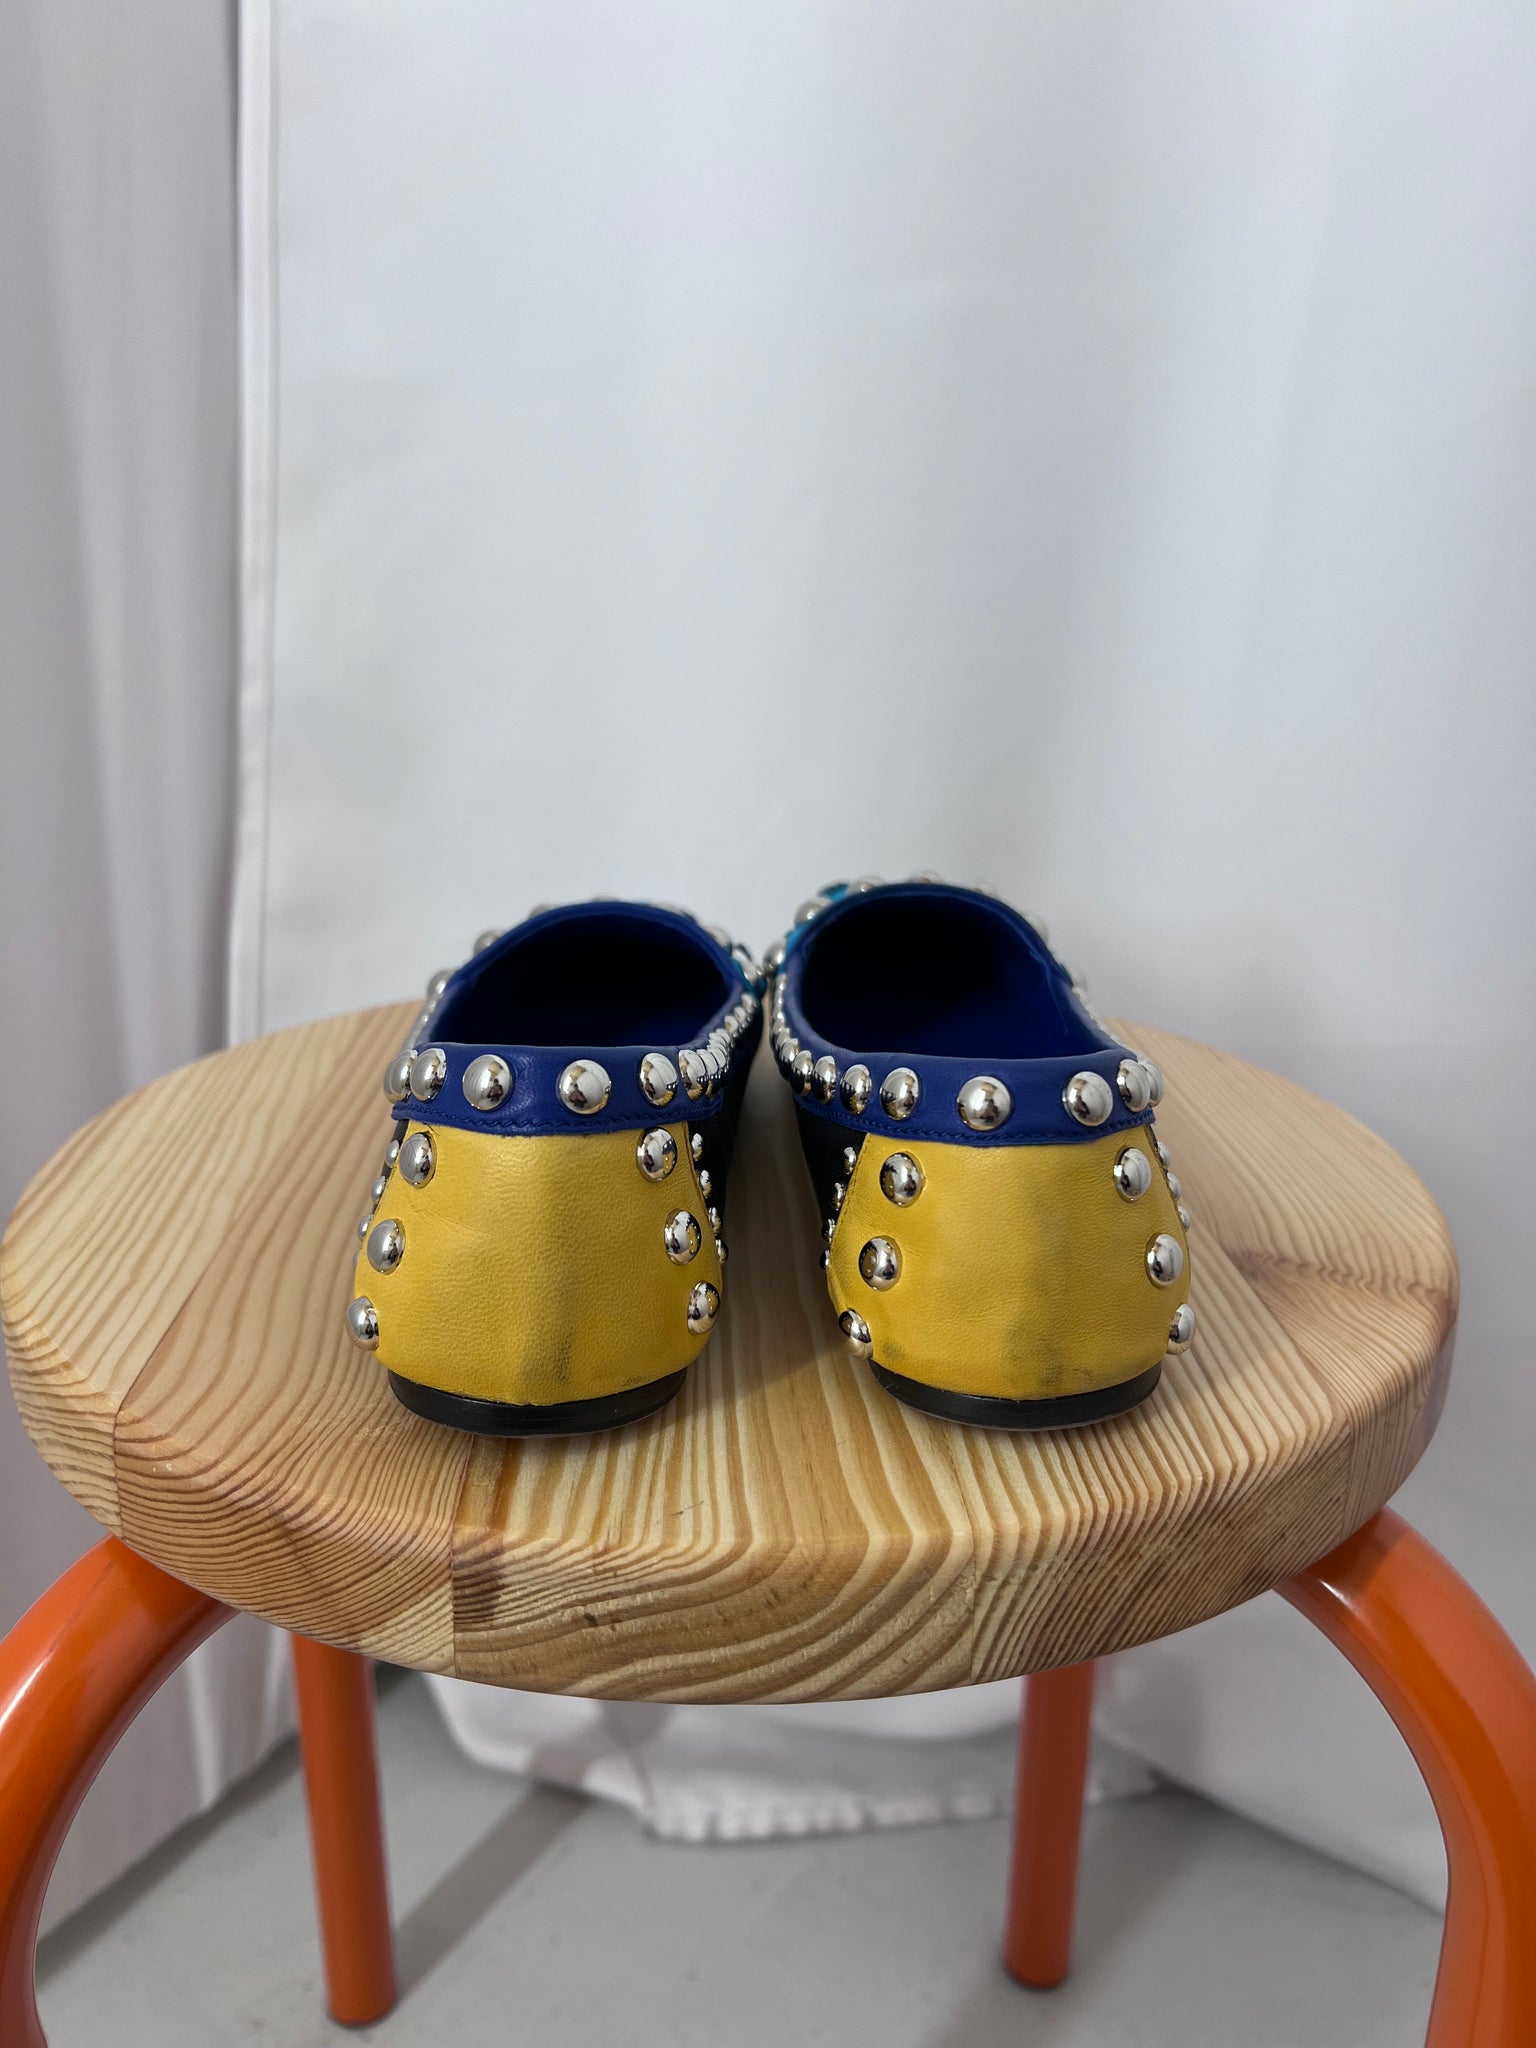 Prada Calzature Multicolored Studded Leather Loafers (9.5)